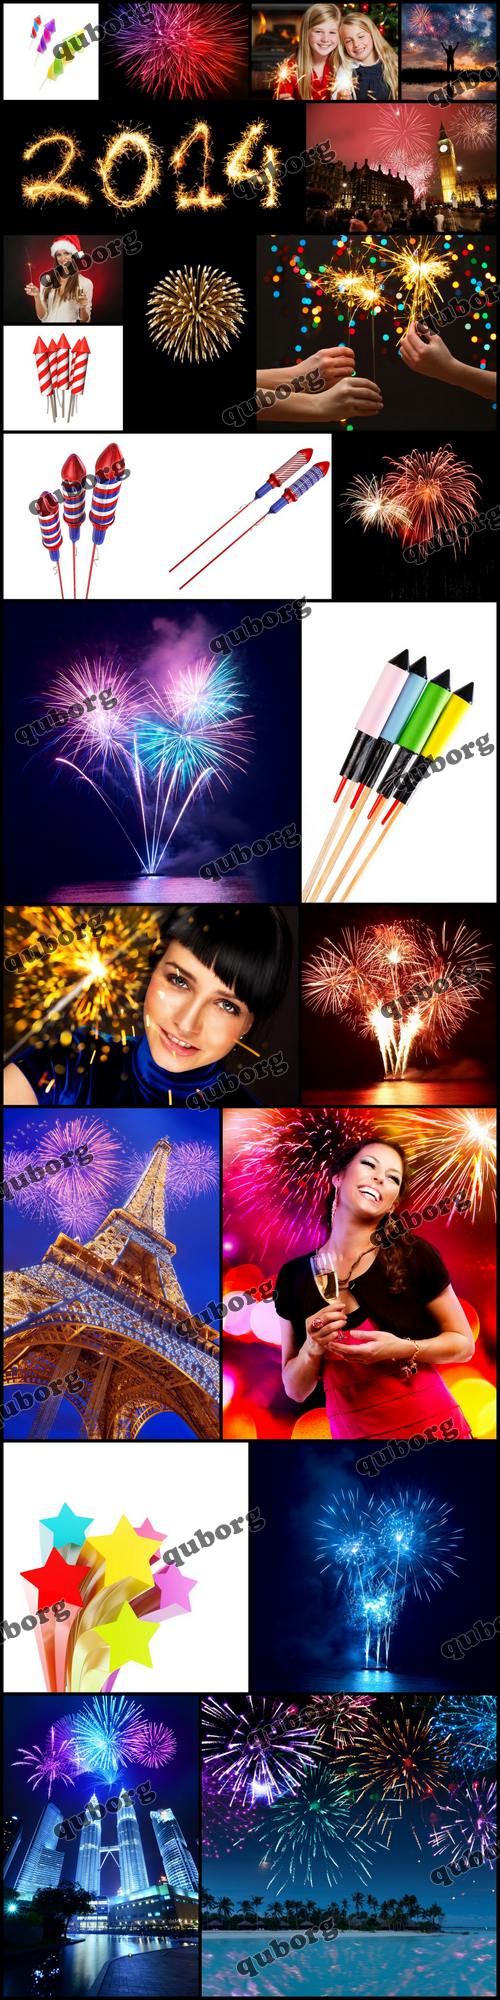 Stock Photos - Fireworks